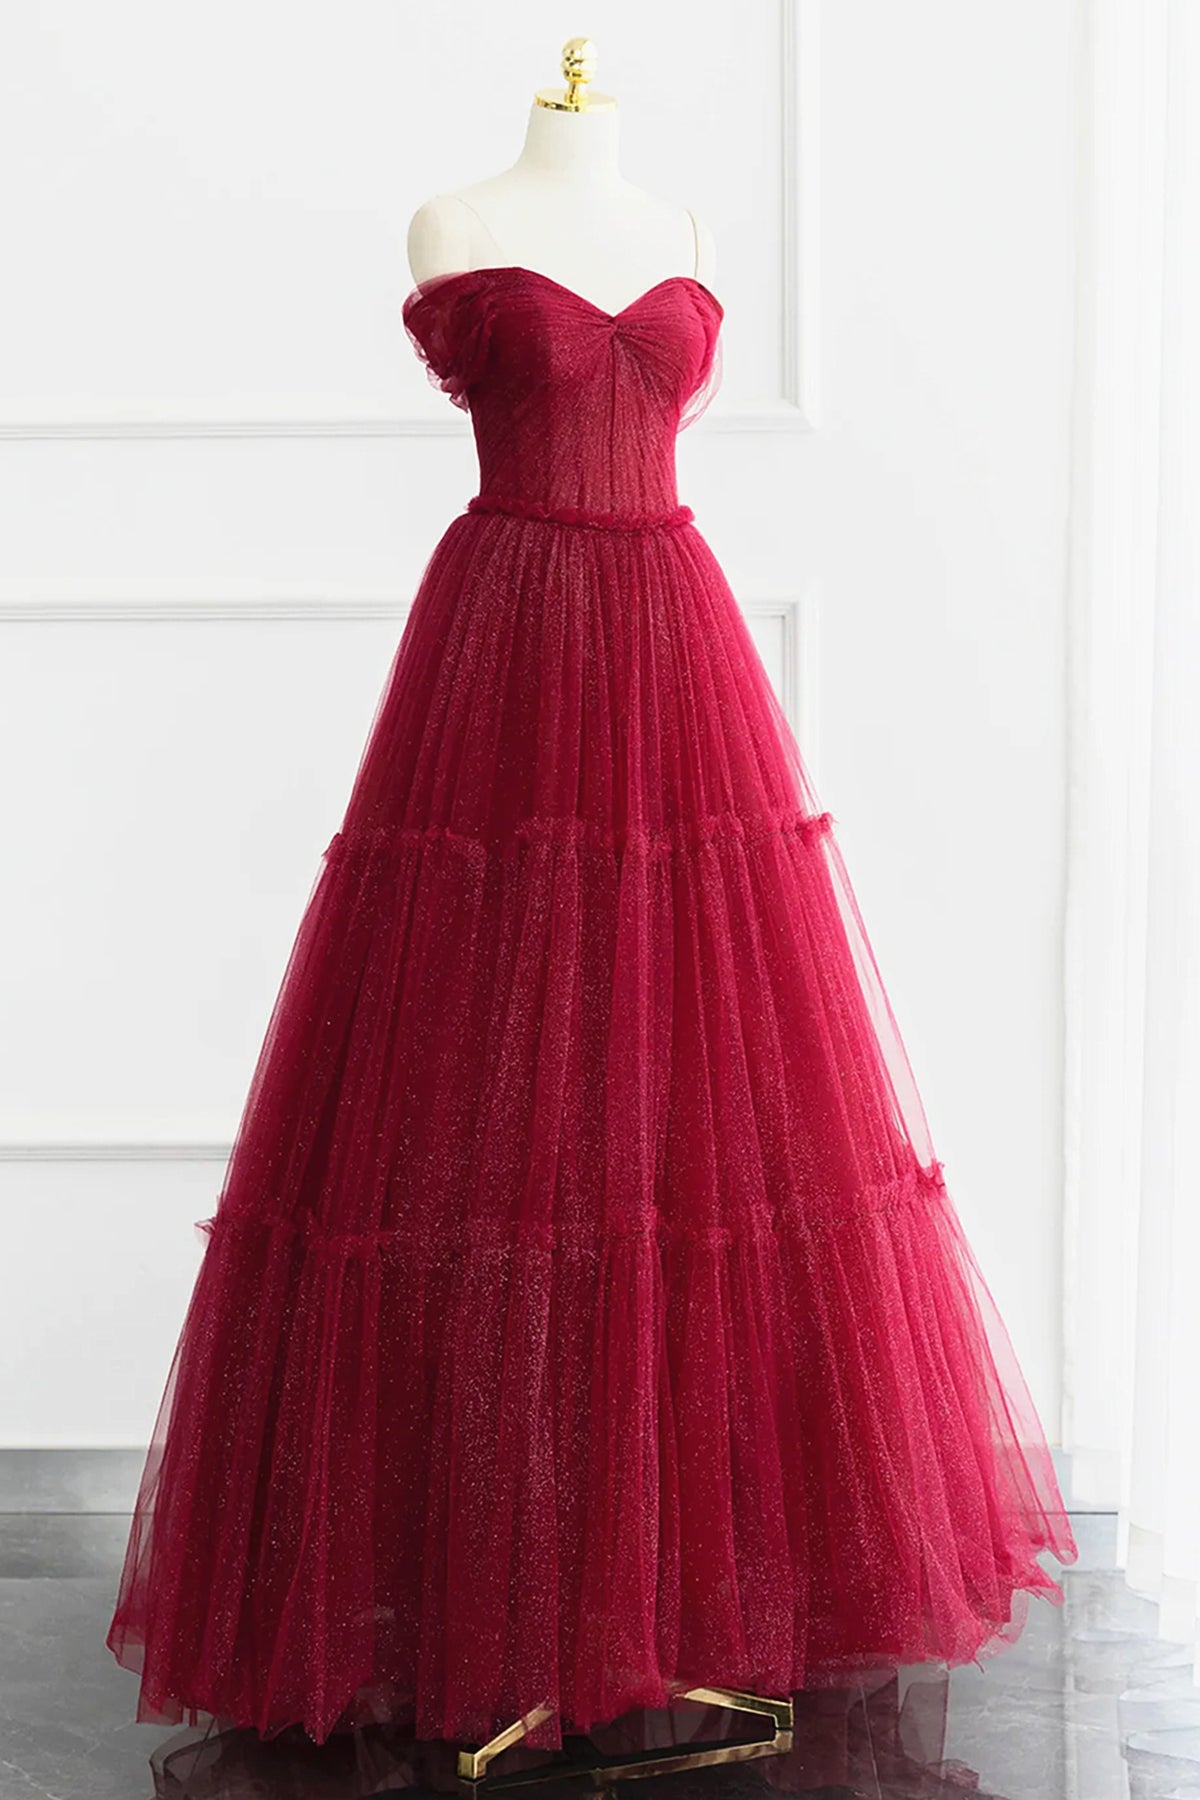 Off the Shoulder Burgundy Tulle Long Prom Dresses, Wine Red Long Tulle Formal Evening Dresses